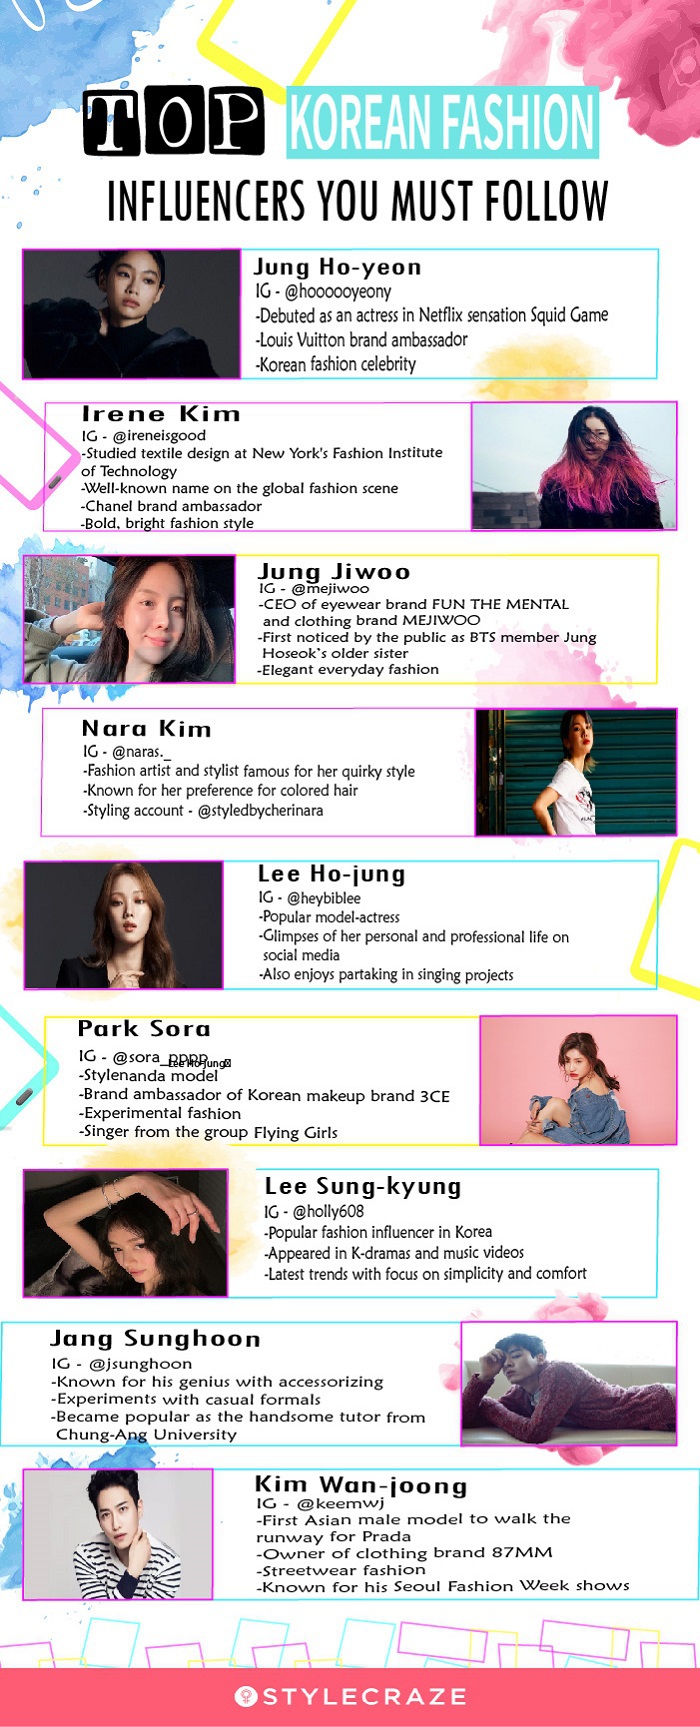 top korean fashion influencers (infographic)